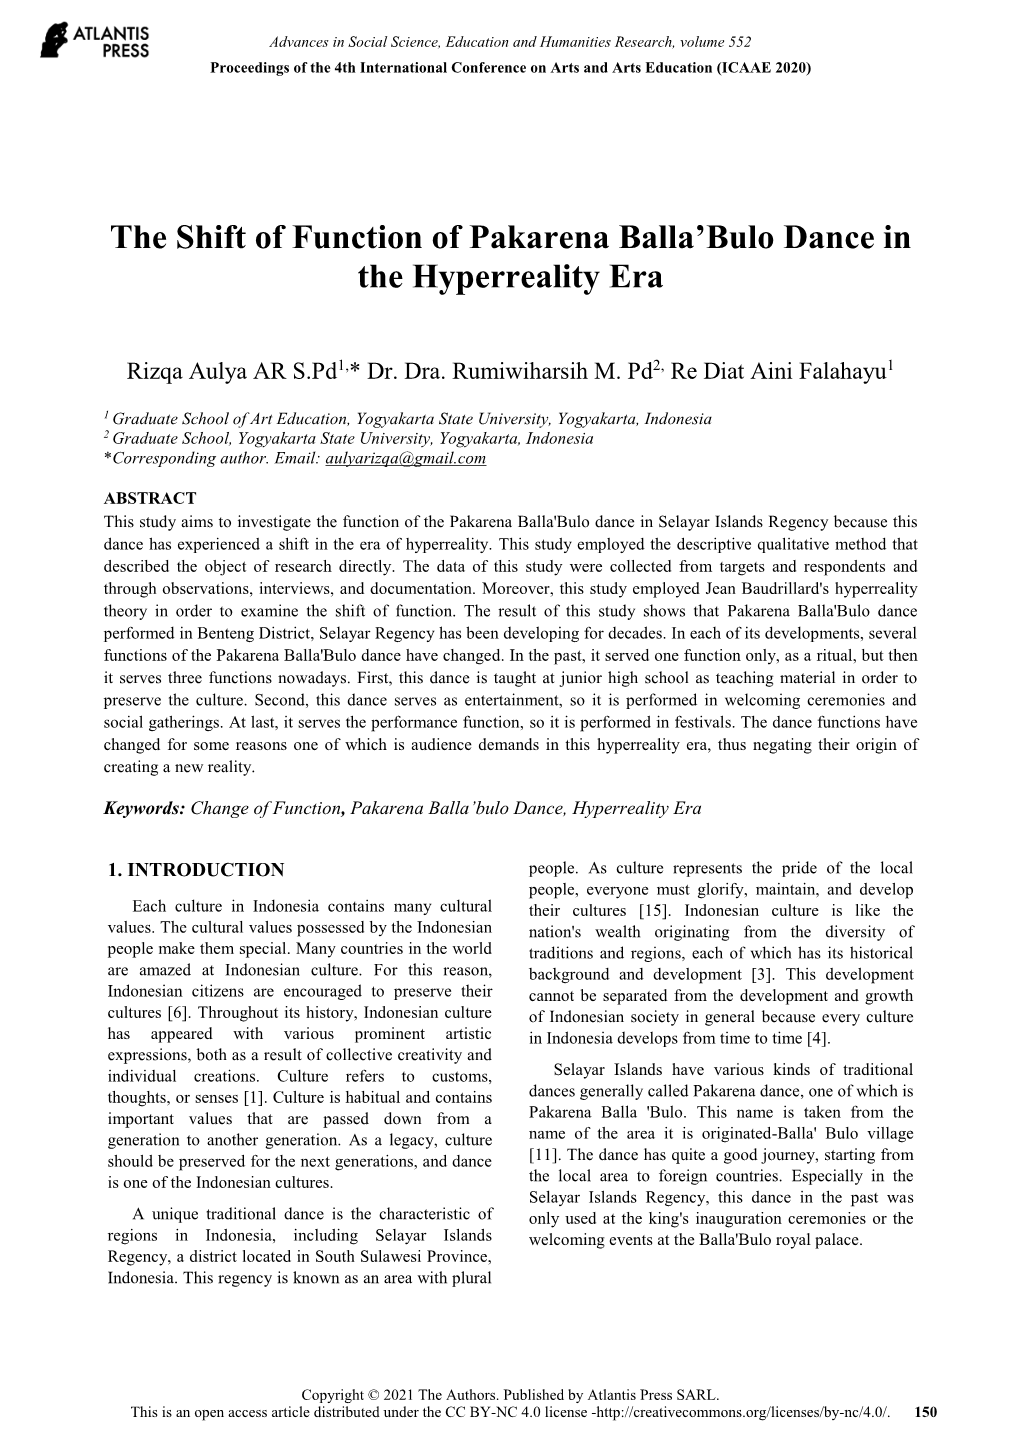 The Shift of Function of Pakarena Balla'bulo Dance In